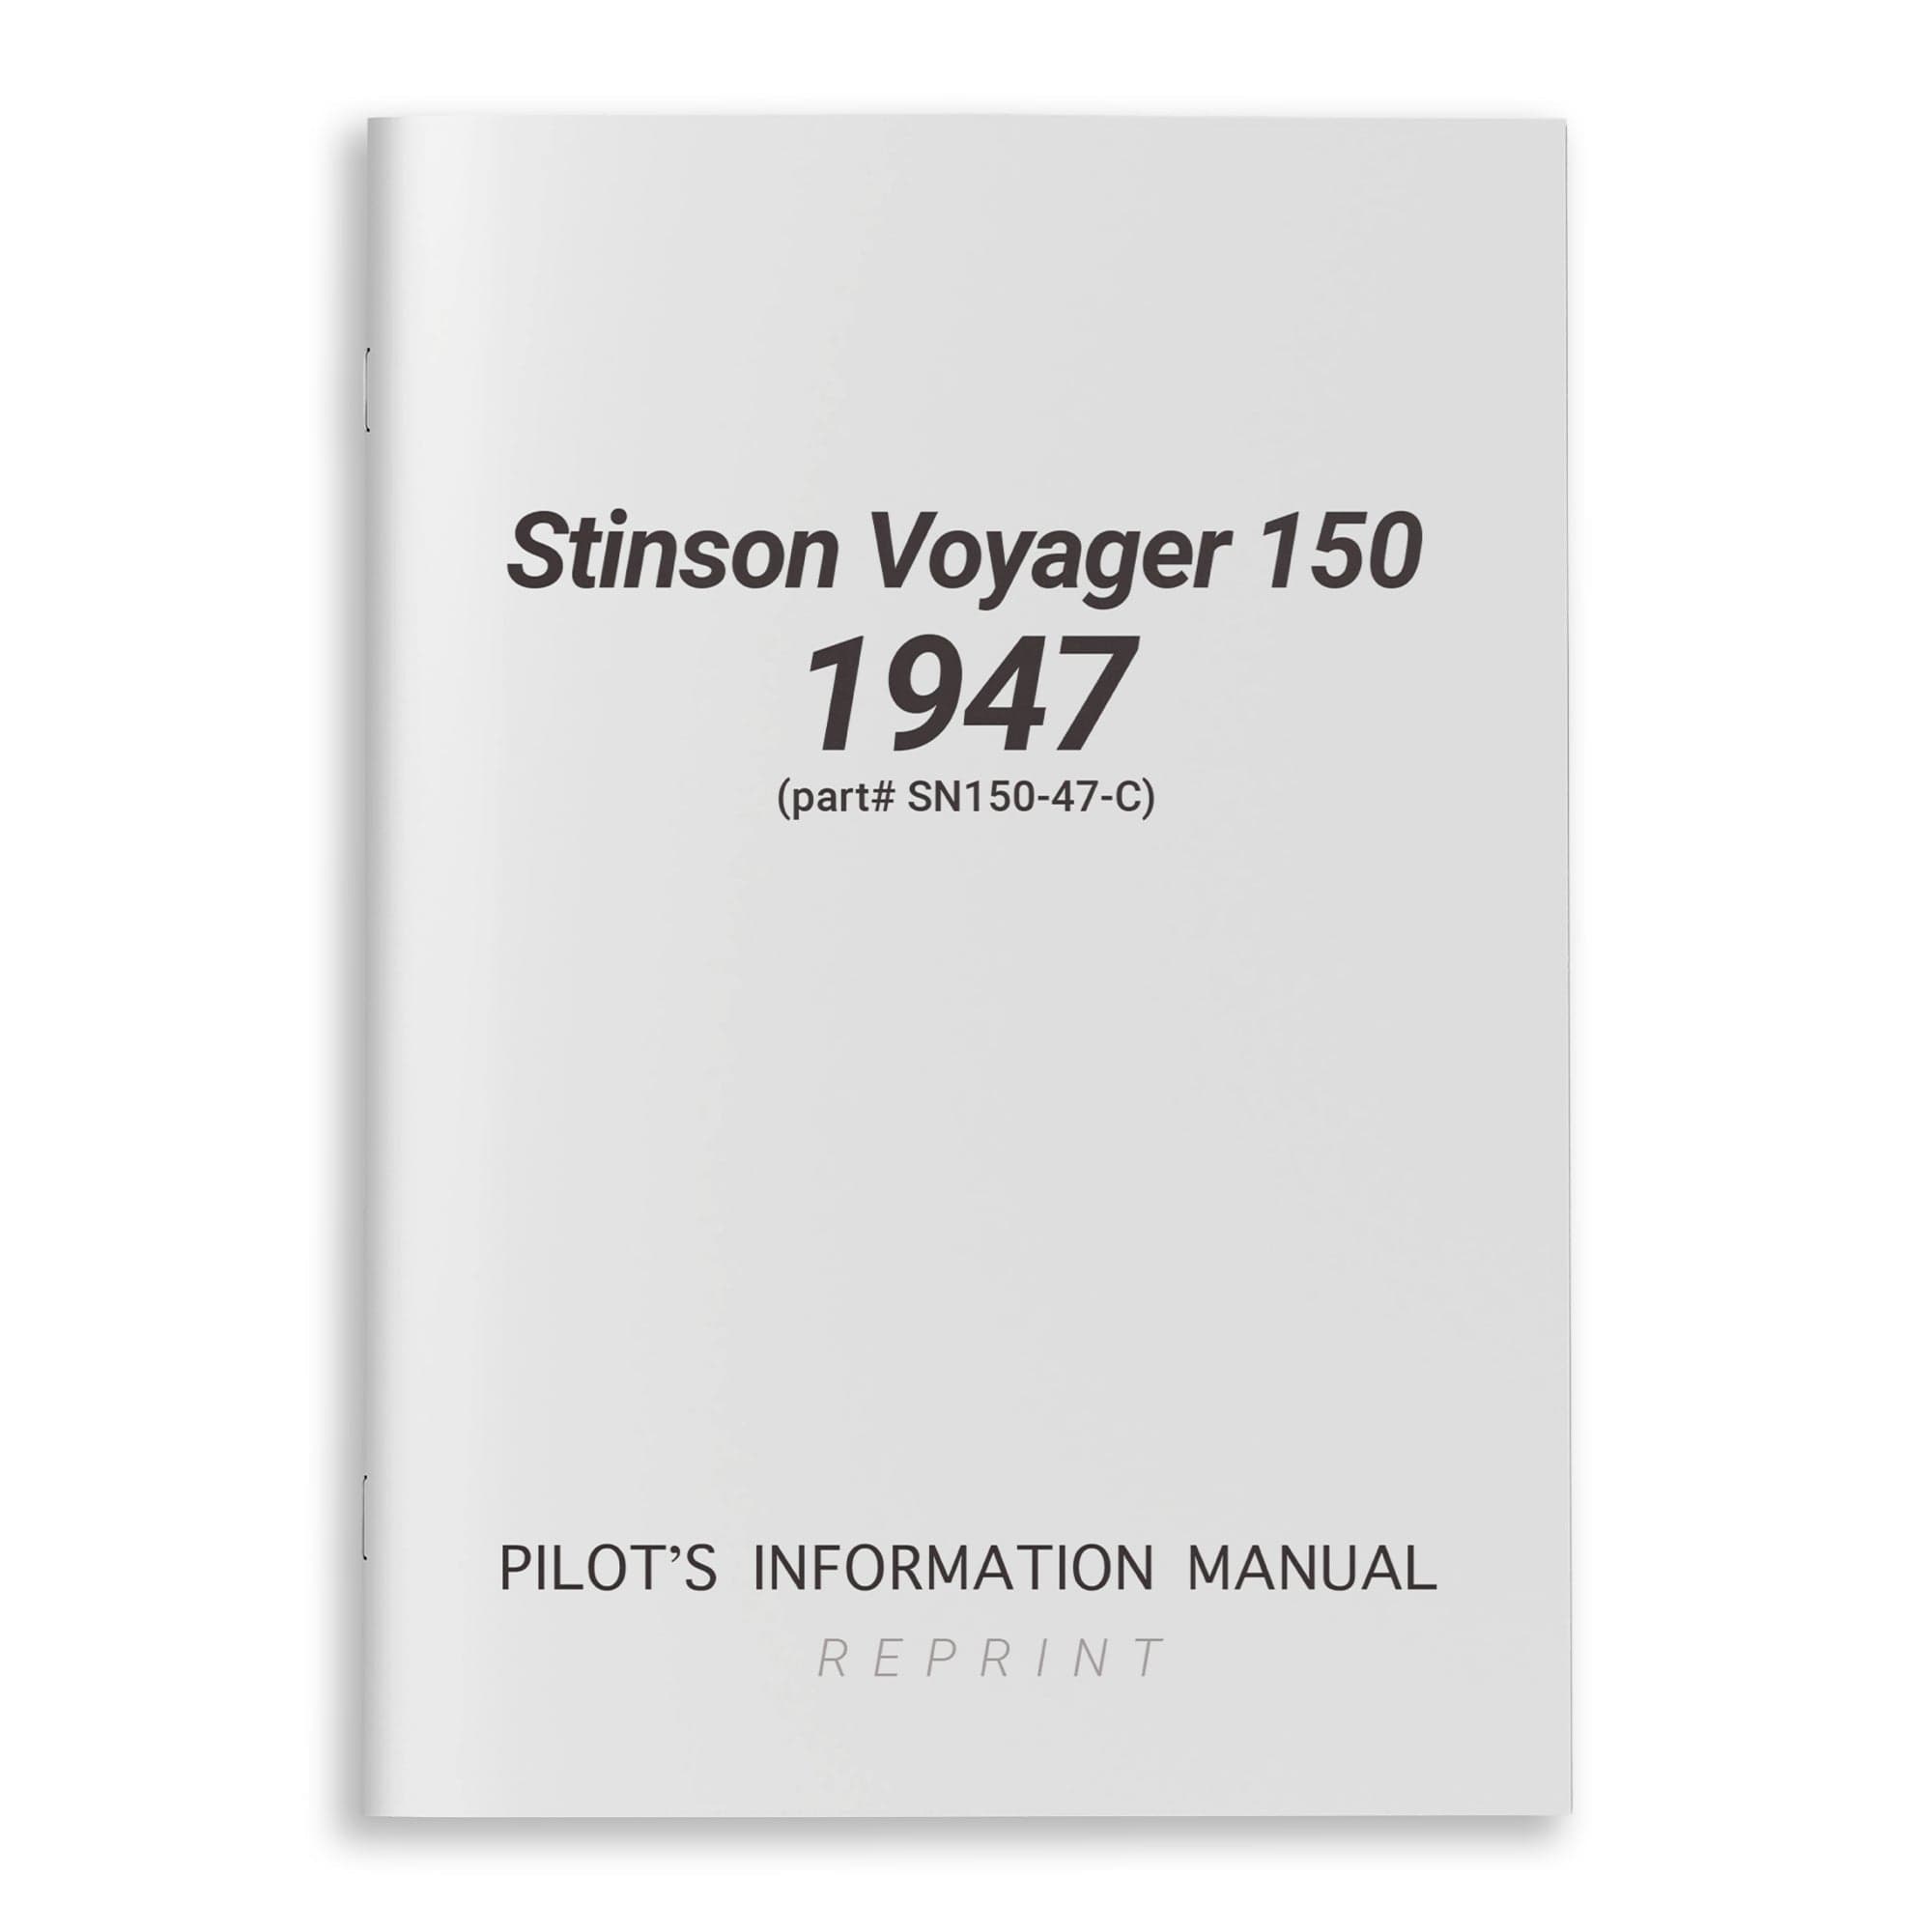 Stinson Voyager 150 1947 Owner's Operating Manual (part# SN150-47-C)